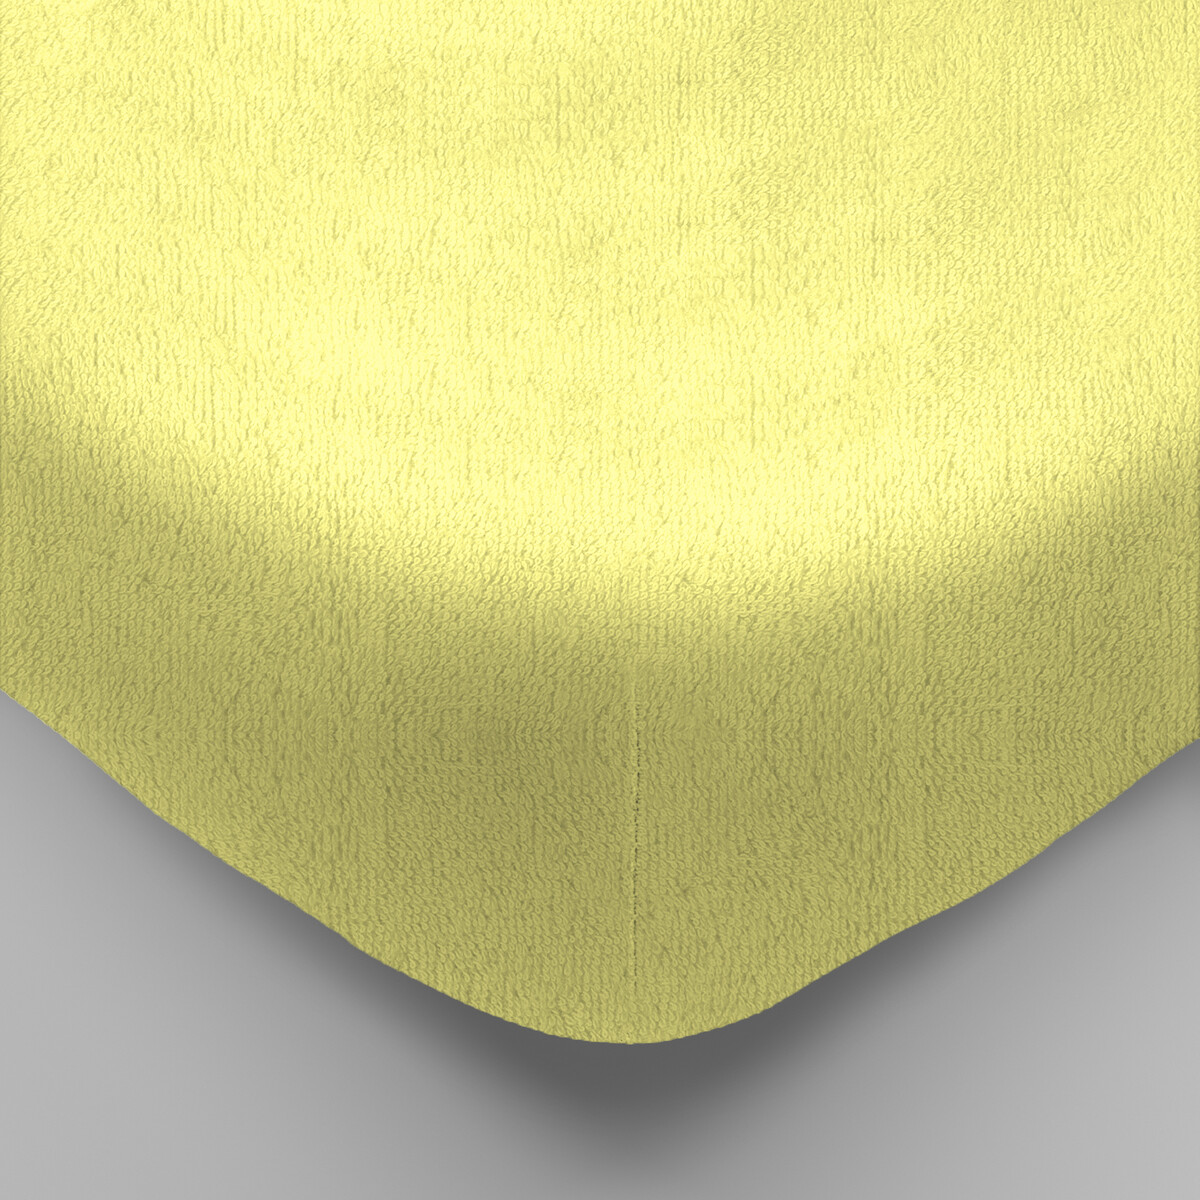 Простыня на резинке LUXSONIA, цвет желтый, размер 180х200 см